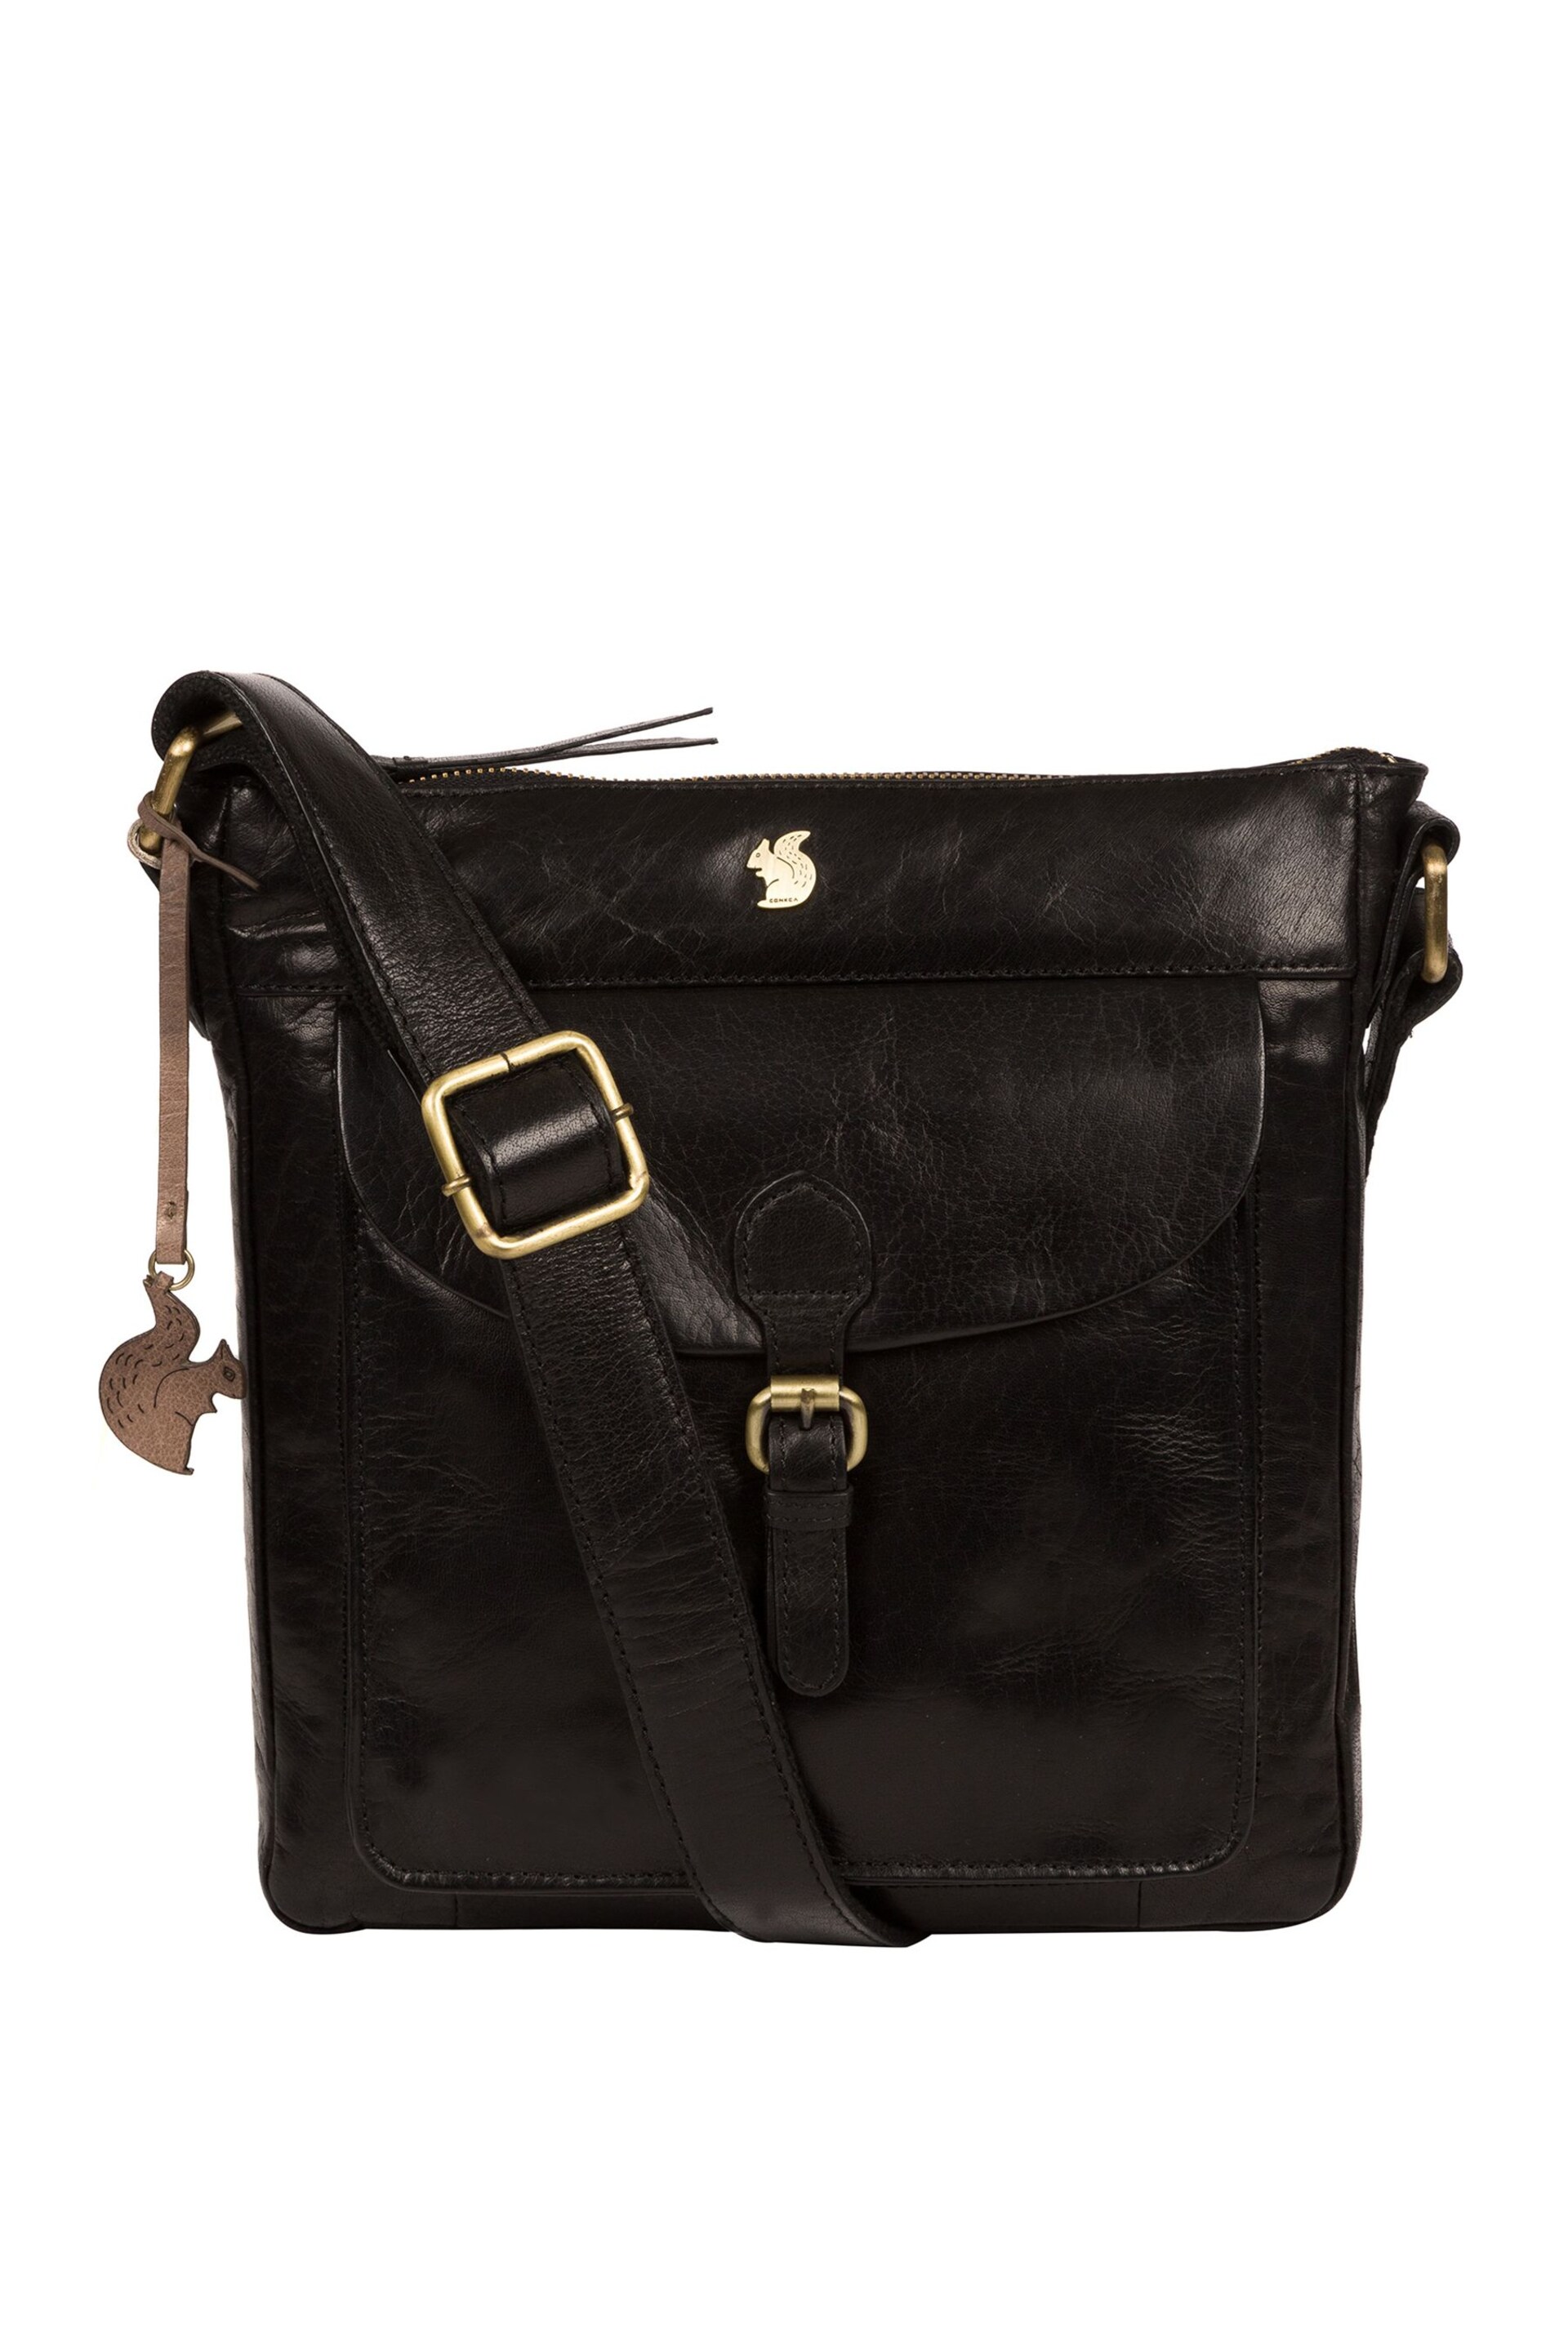 Conkca Josephine Leather Shoulder Bag - Image 2 of 5